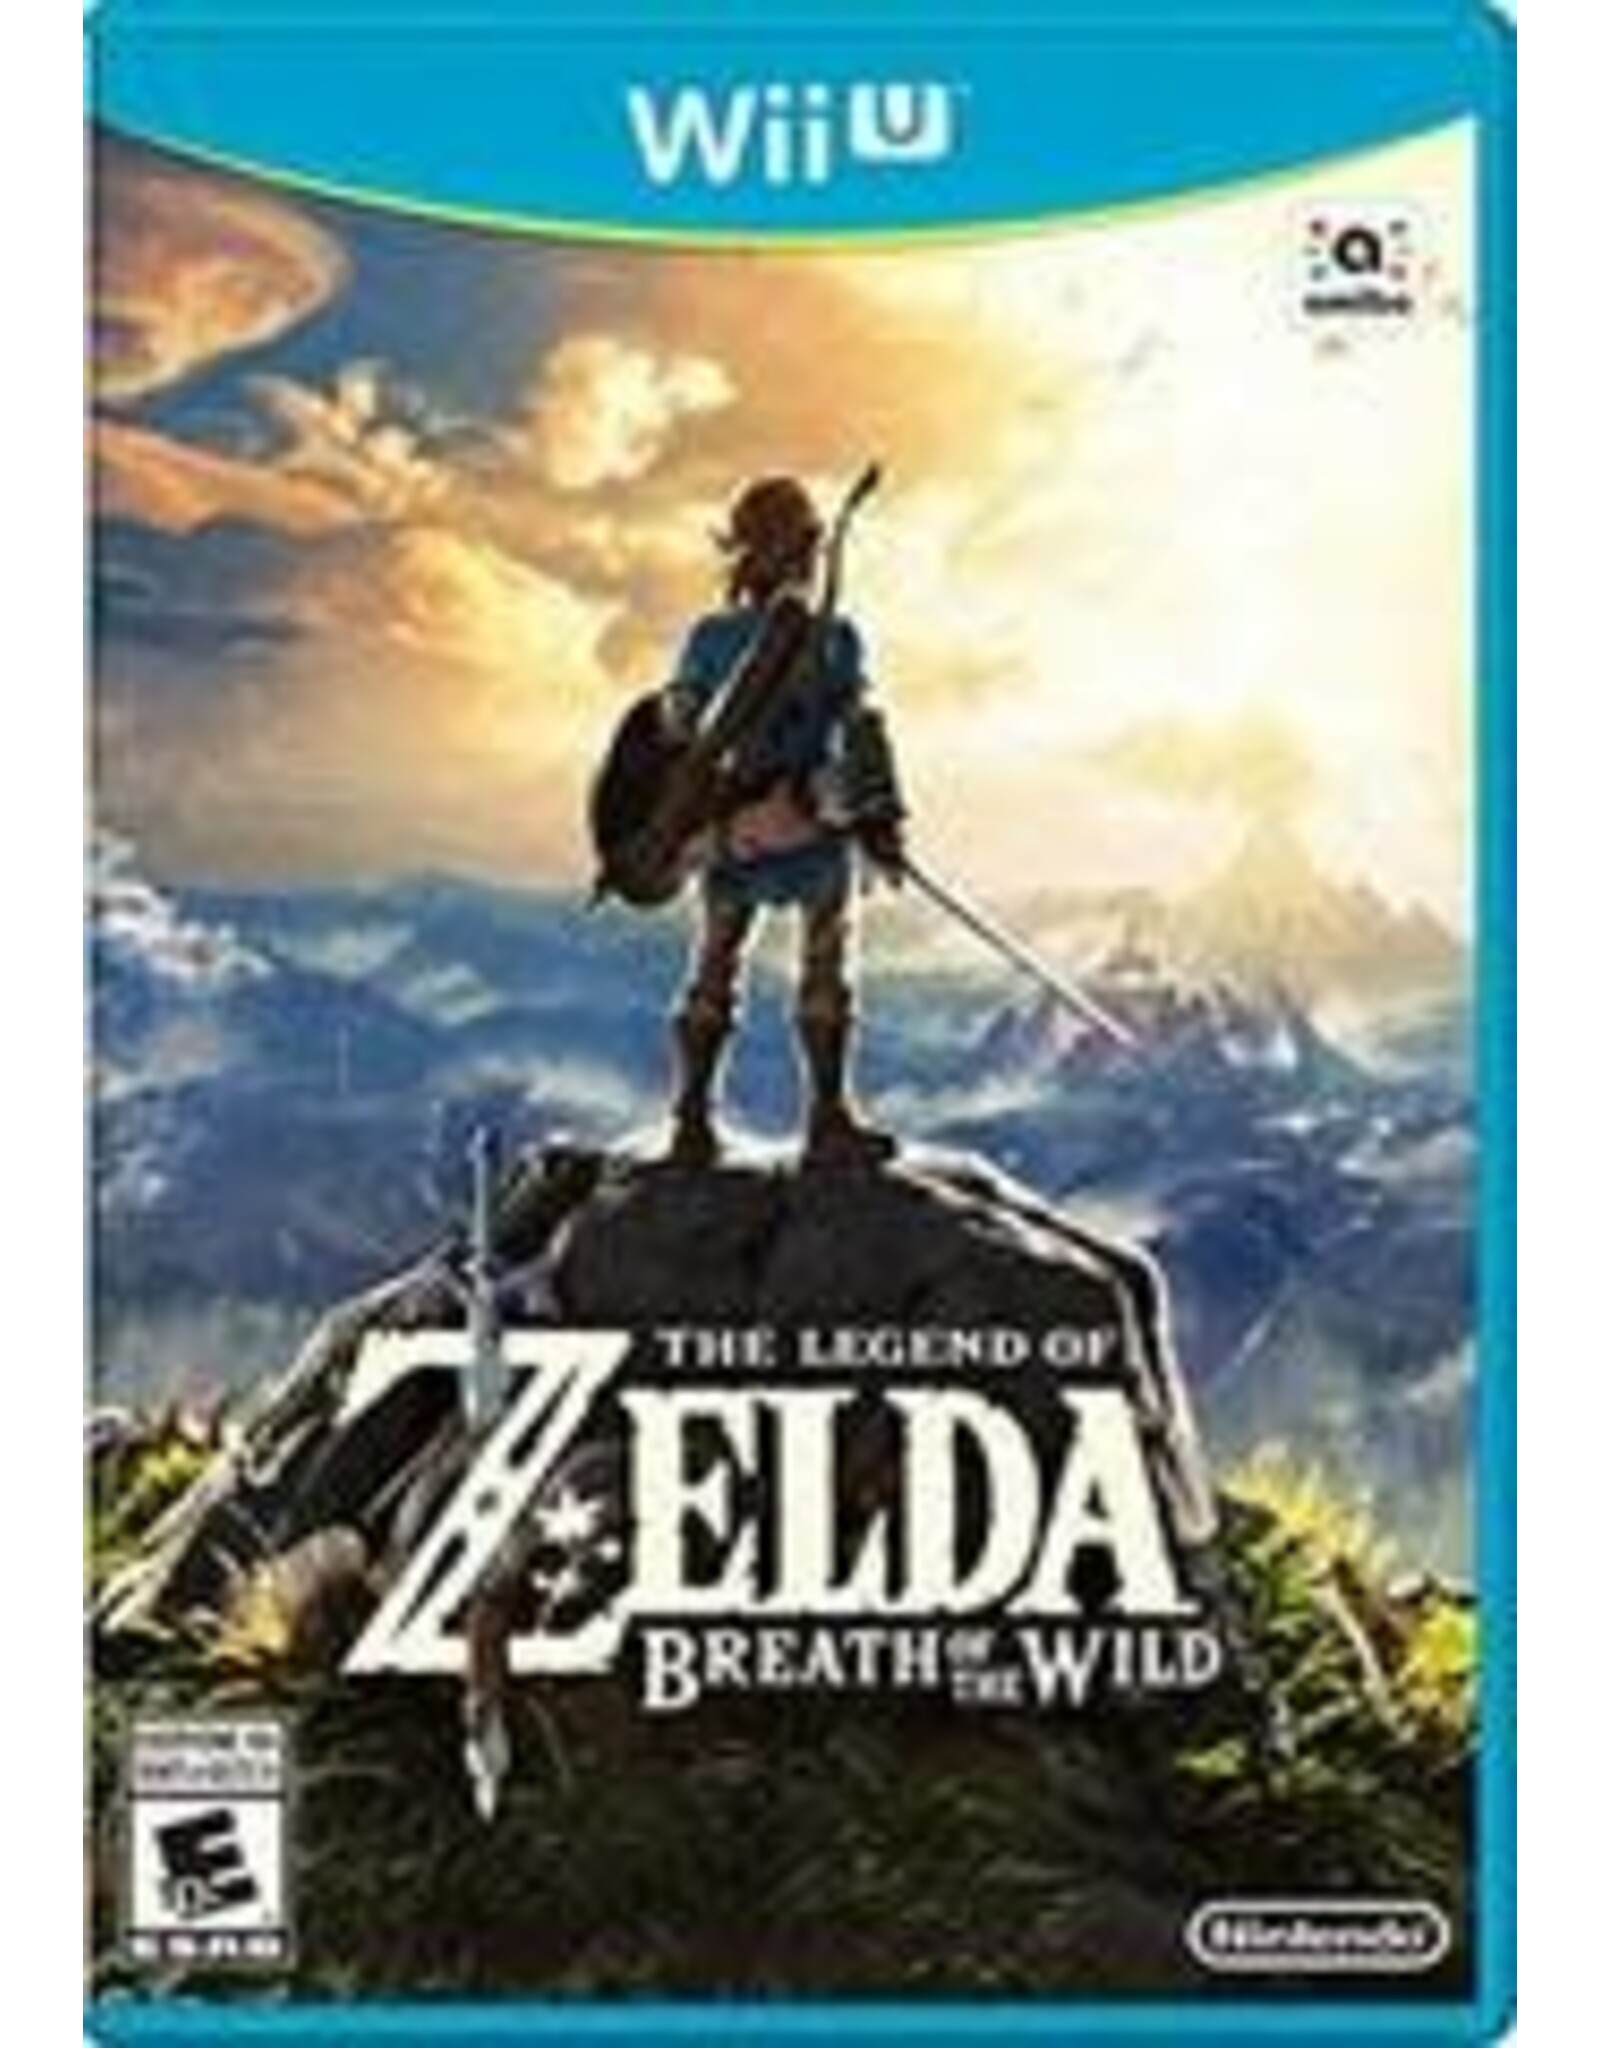 Wii U Zelda Breath of the Wild (Used)